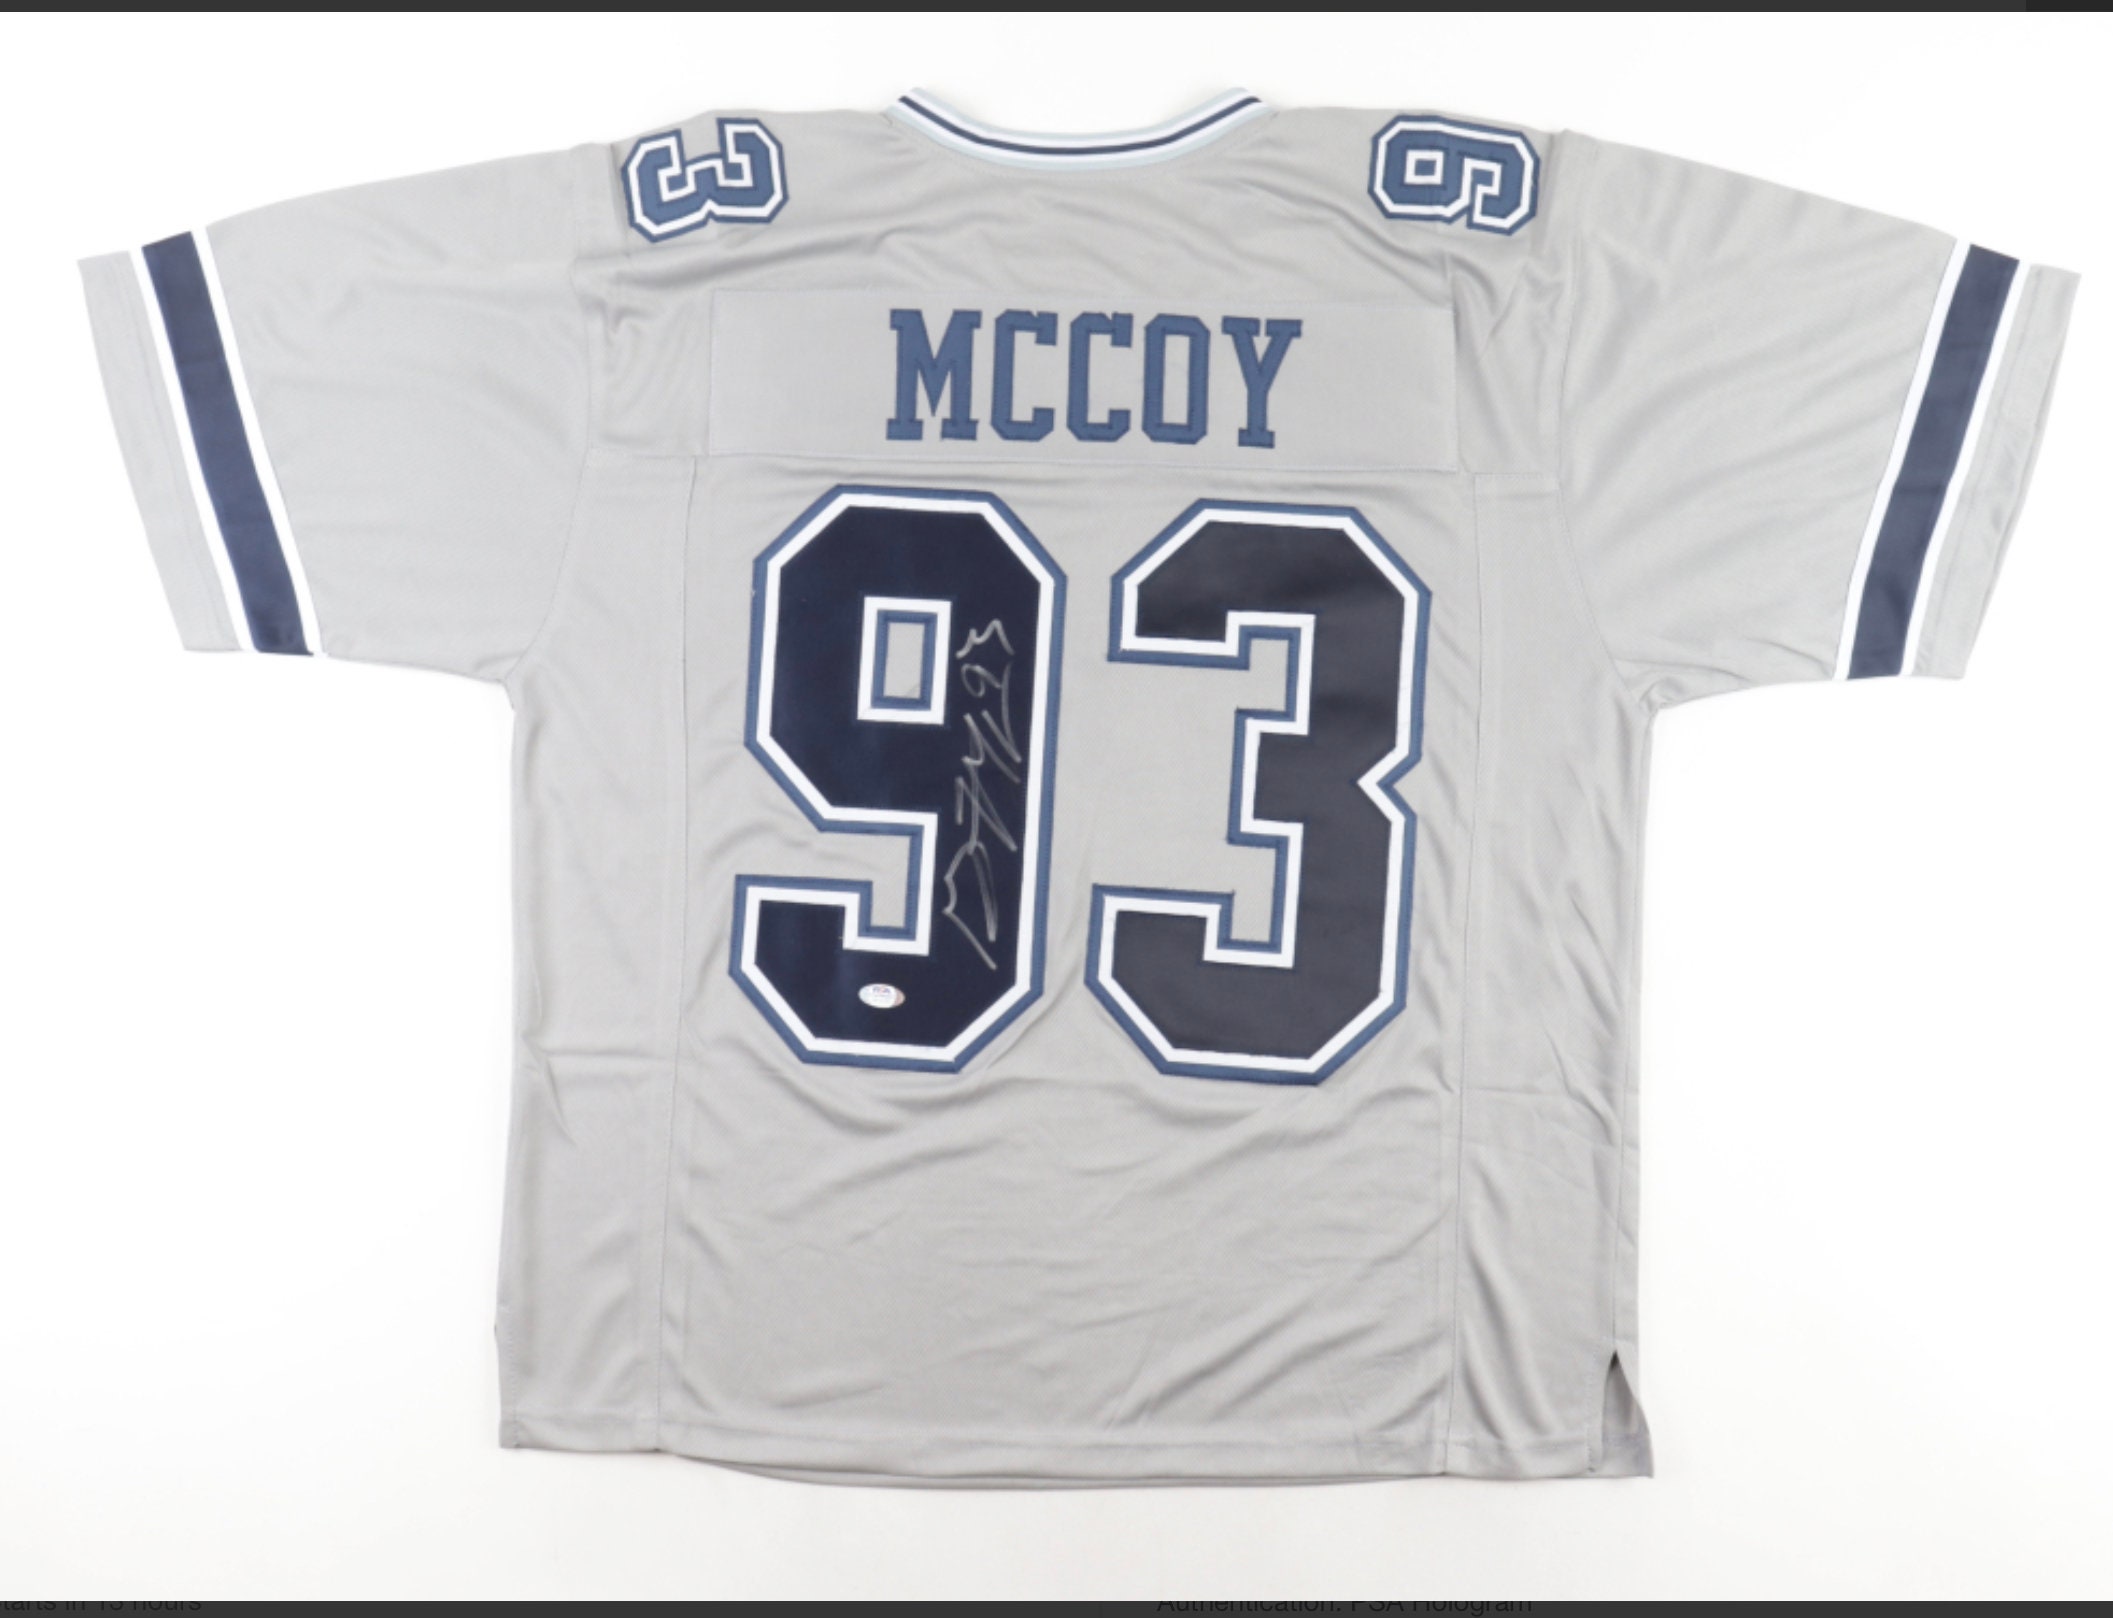 Gerald McCoy Signed Jersey Number 9 Patch (PSA COA)